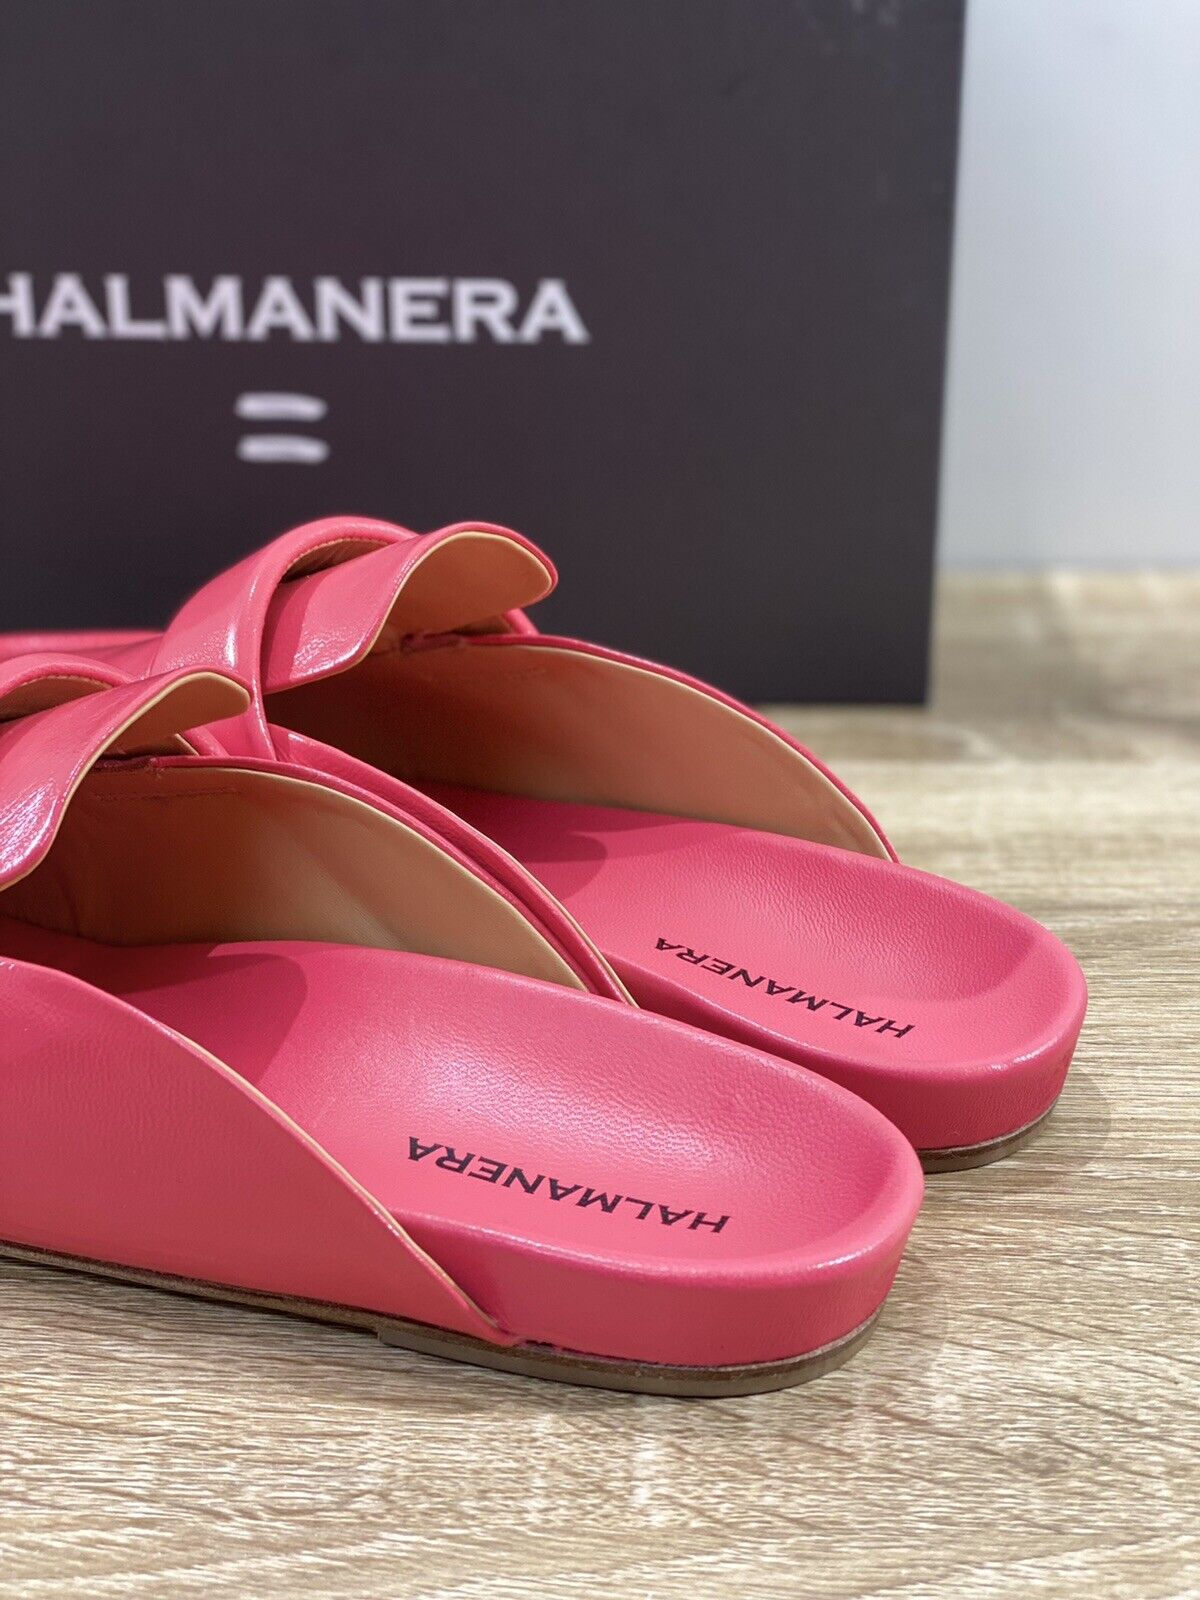 Halmanera Sabtot donna ester 01 pelle amaranto luxury shoes 39